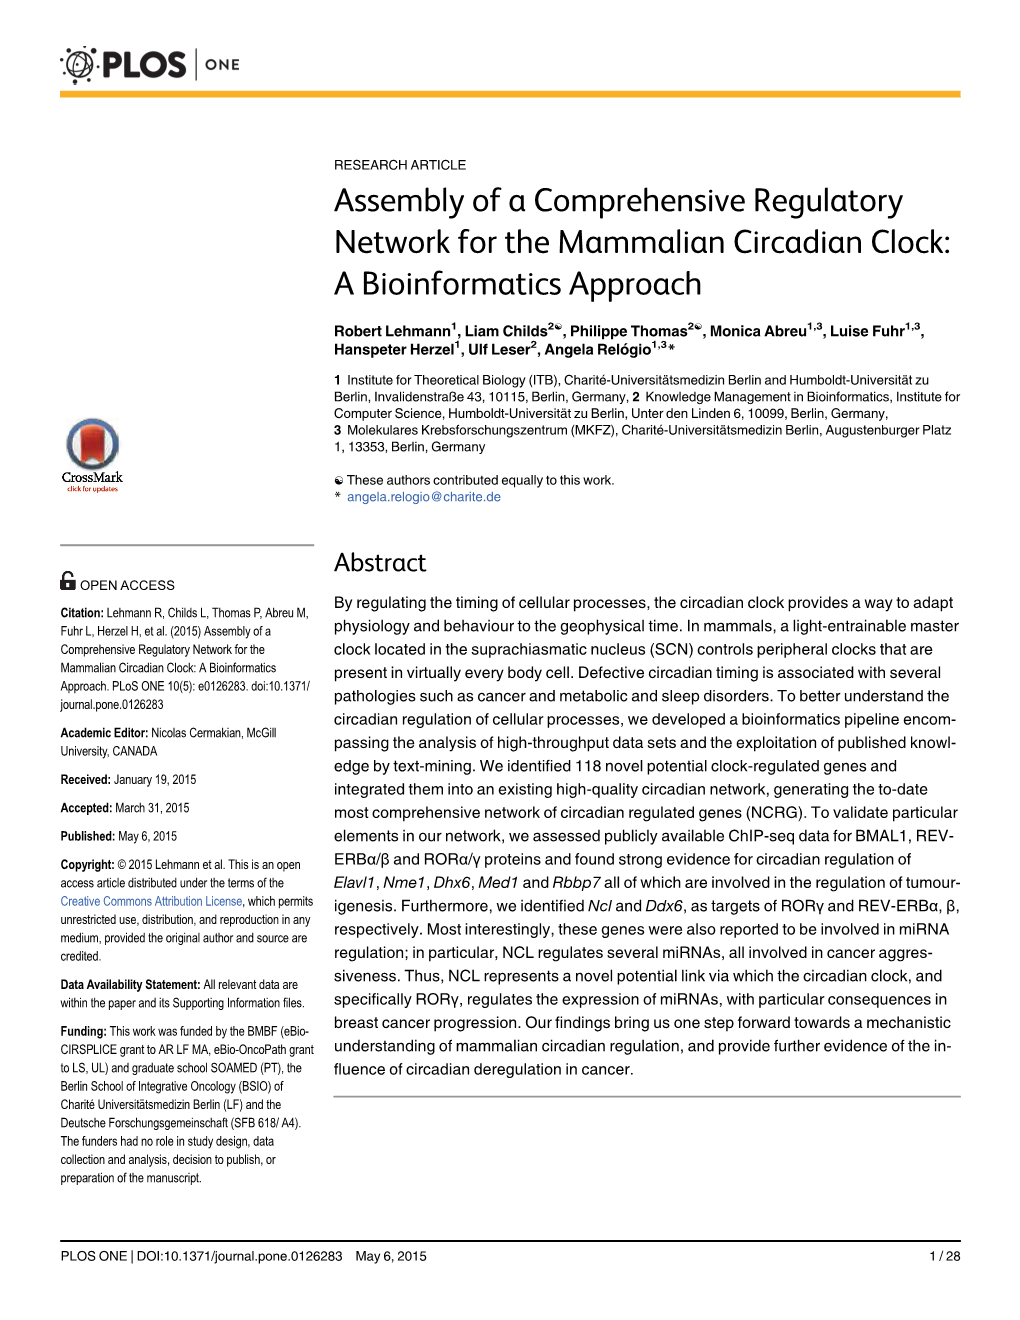 Assembly of a Comprehensive Regulatory Network for the Mammalian Circadian Clock: a Bioinformatics Approach